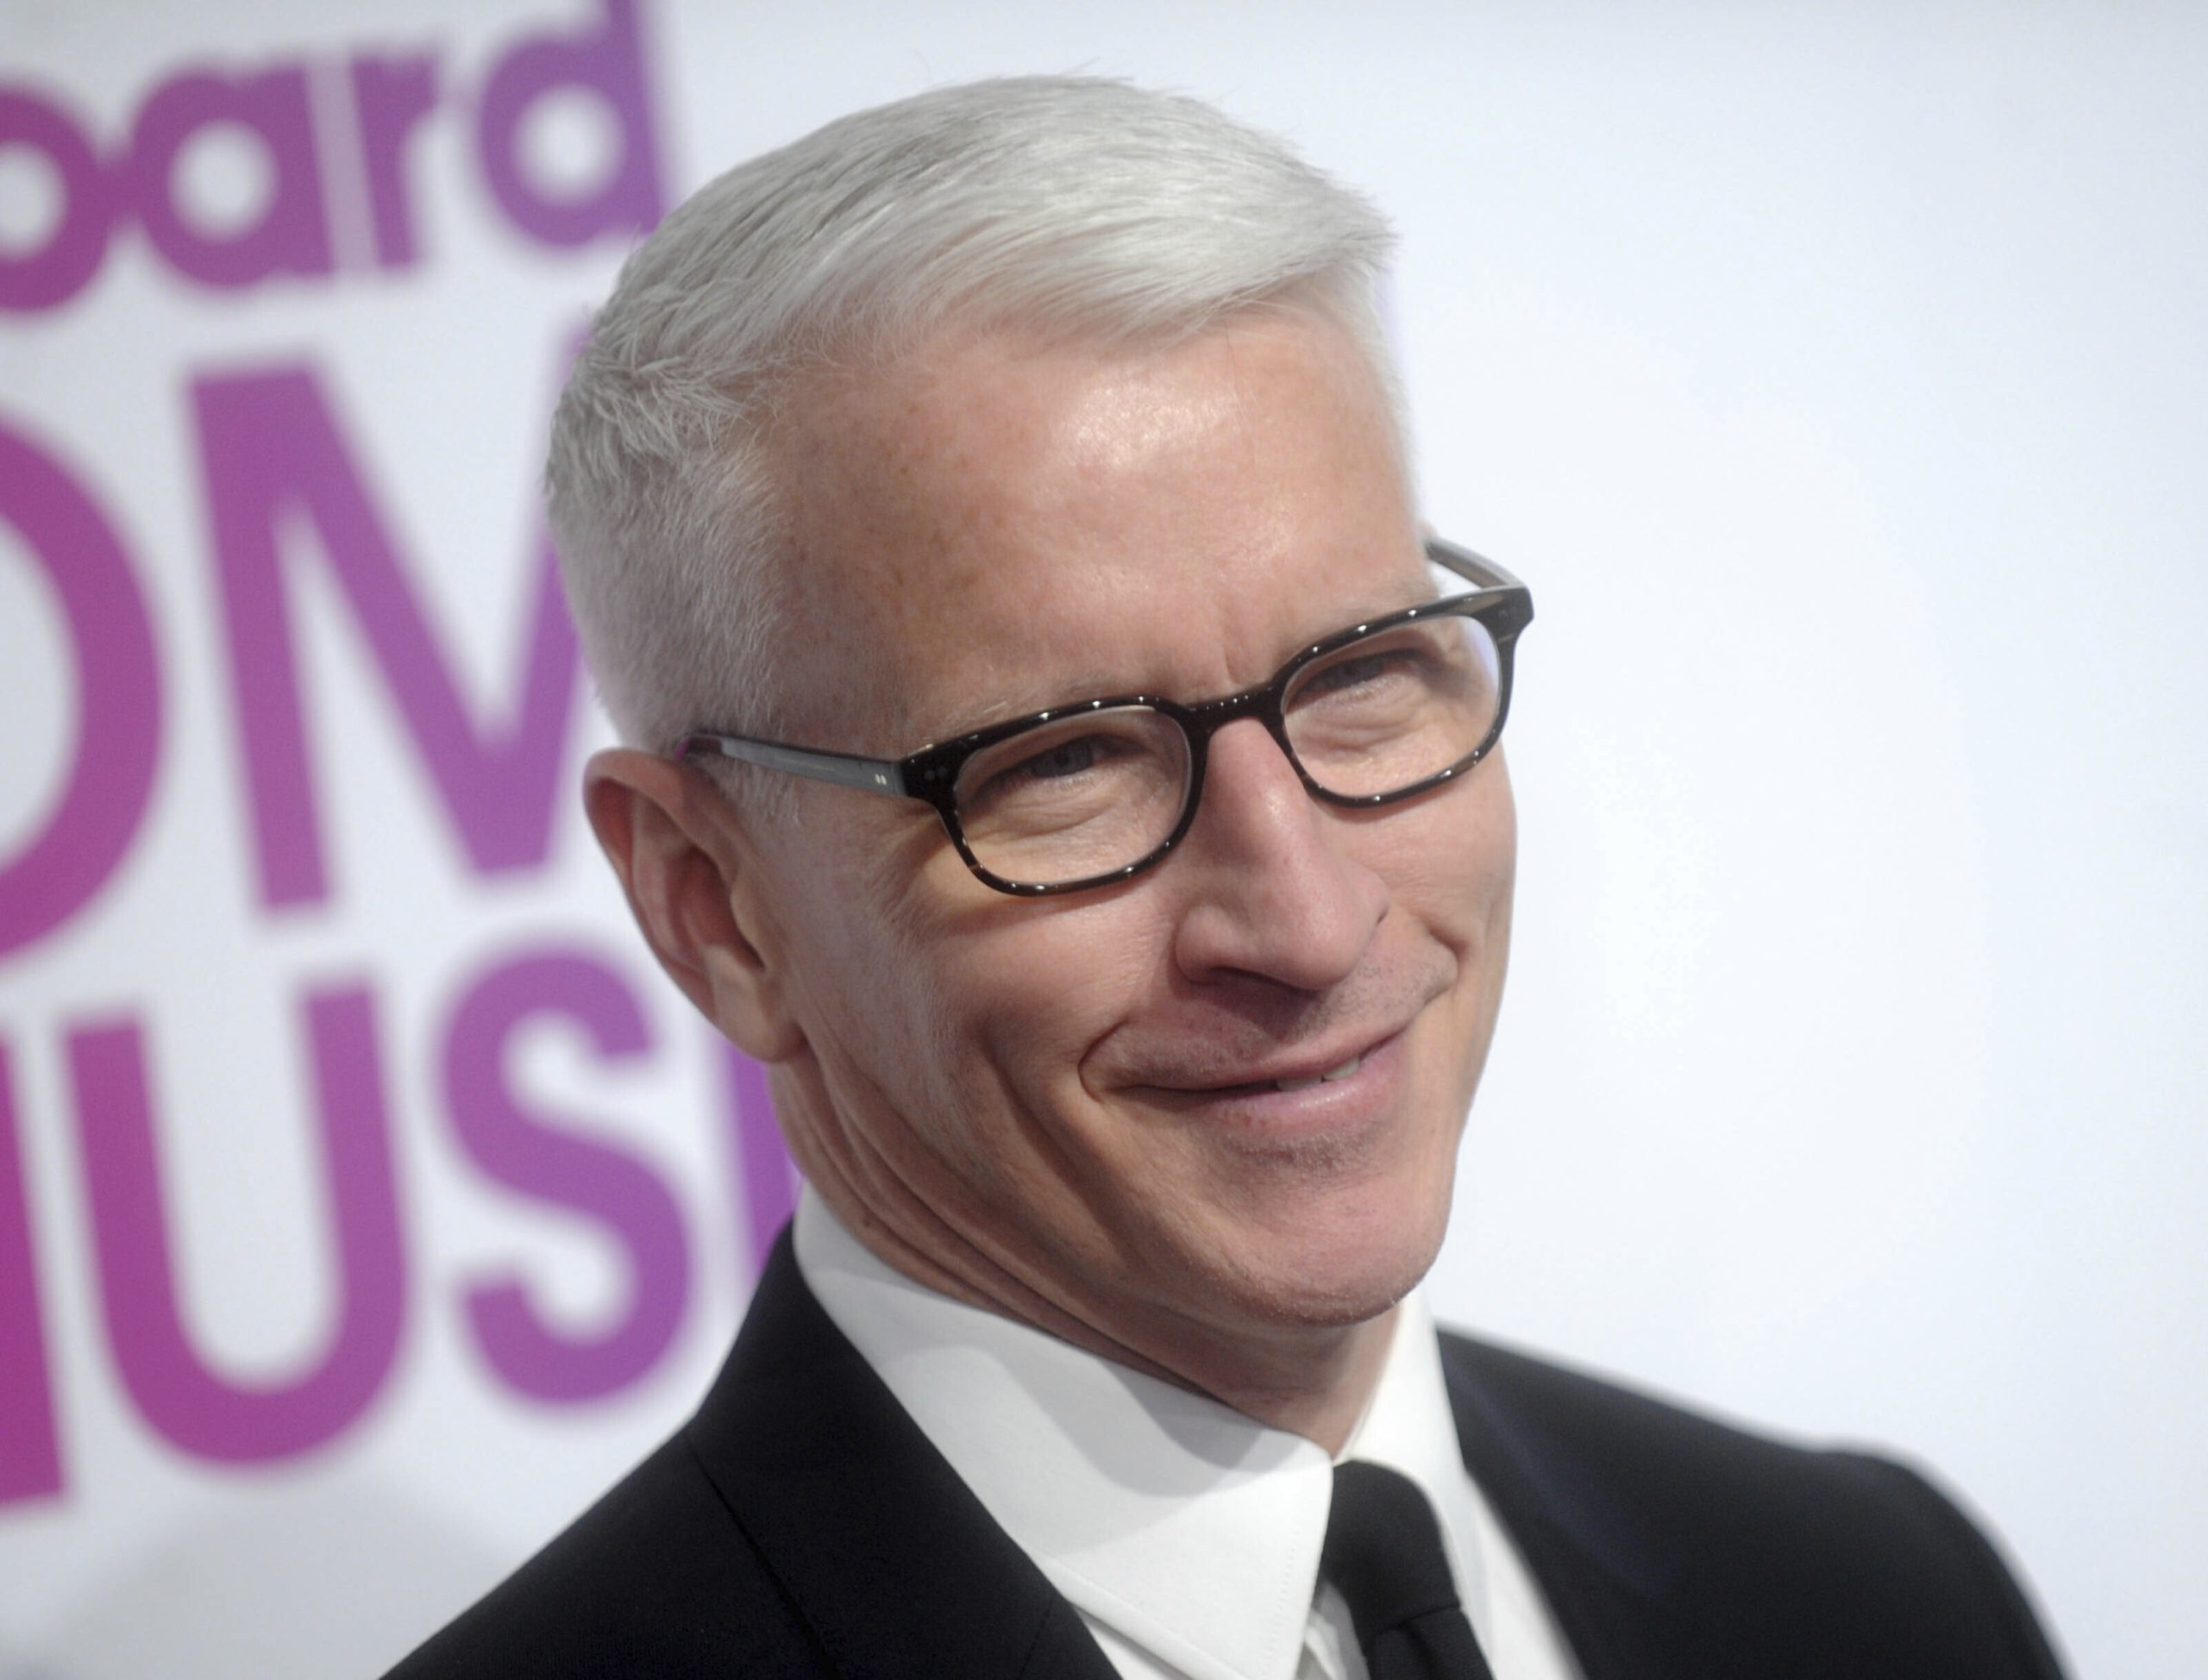 Anderson Cooper Announces Birth of His Son, Wyatt